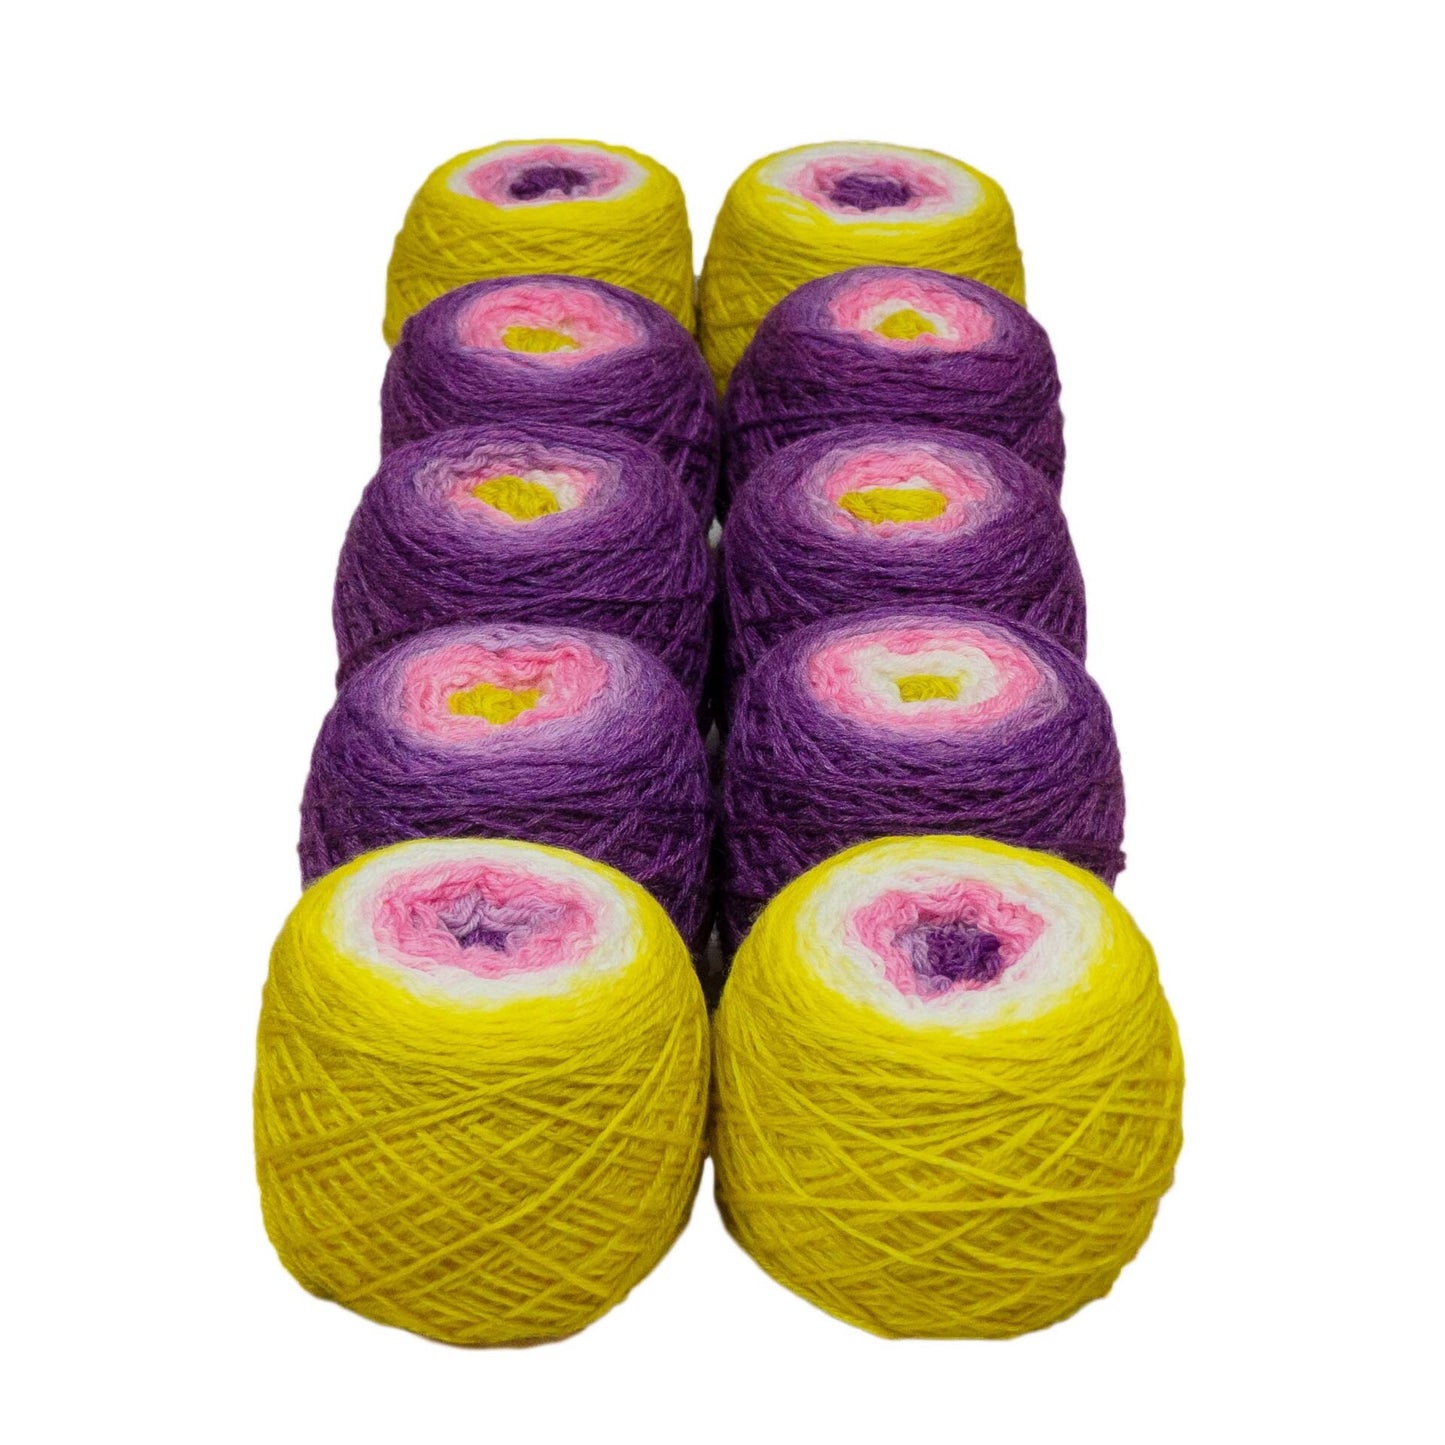 Sock Twins " Princess Zelda " - Lleaf SW Merino/Bamboo Handpainted Gradient Sock Yarn Set